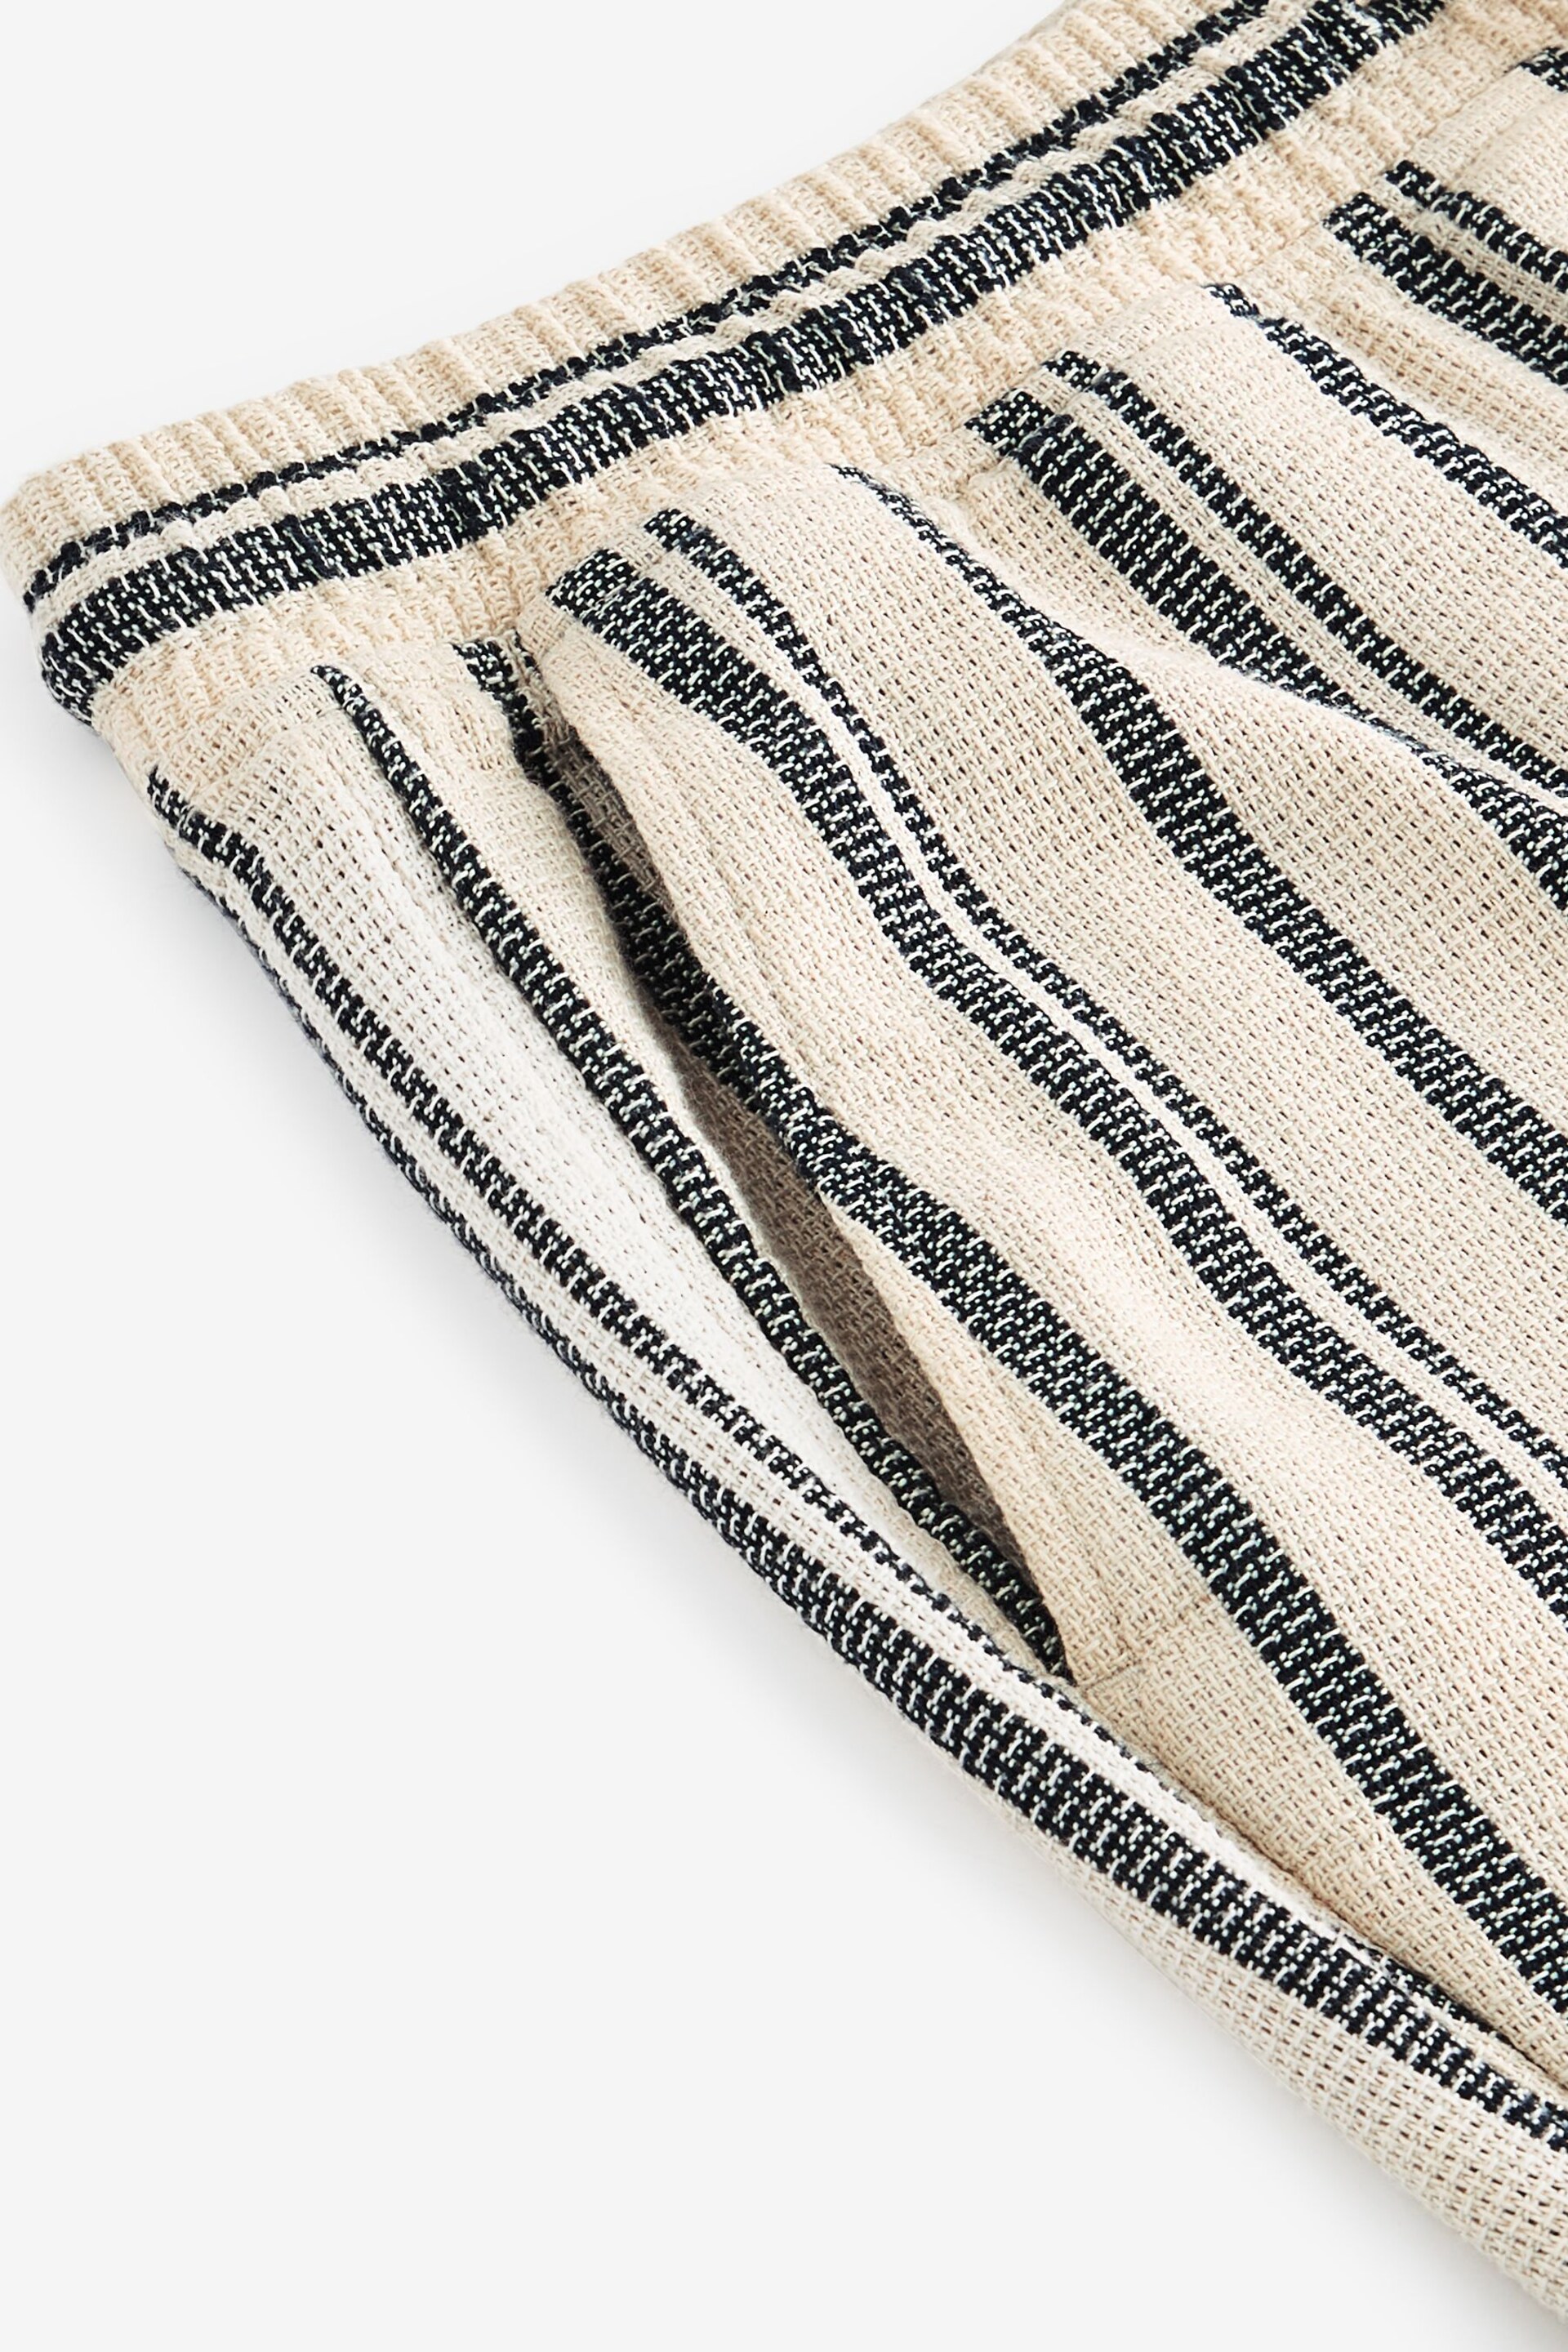 Ecru/Navy Striped Textured Dock Shorts - Image 6 of 8